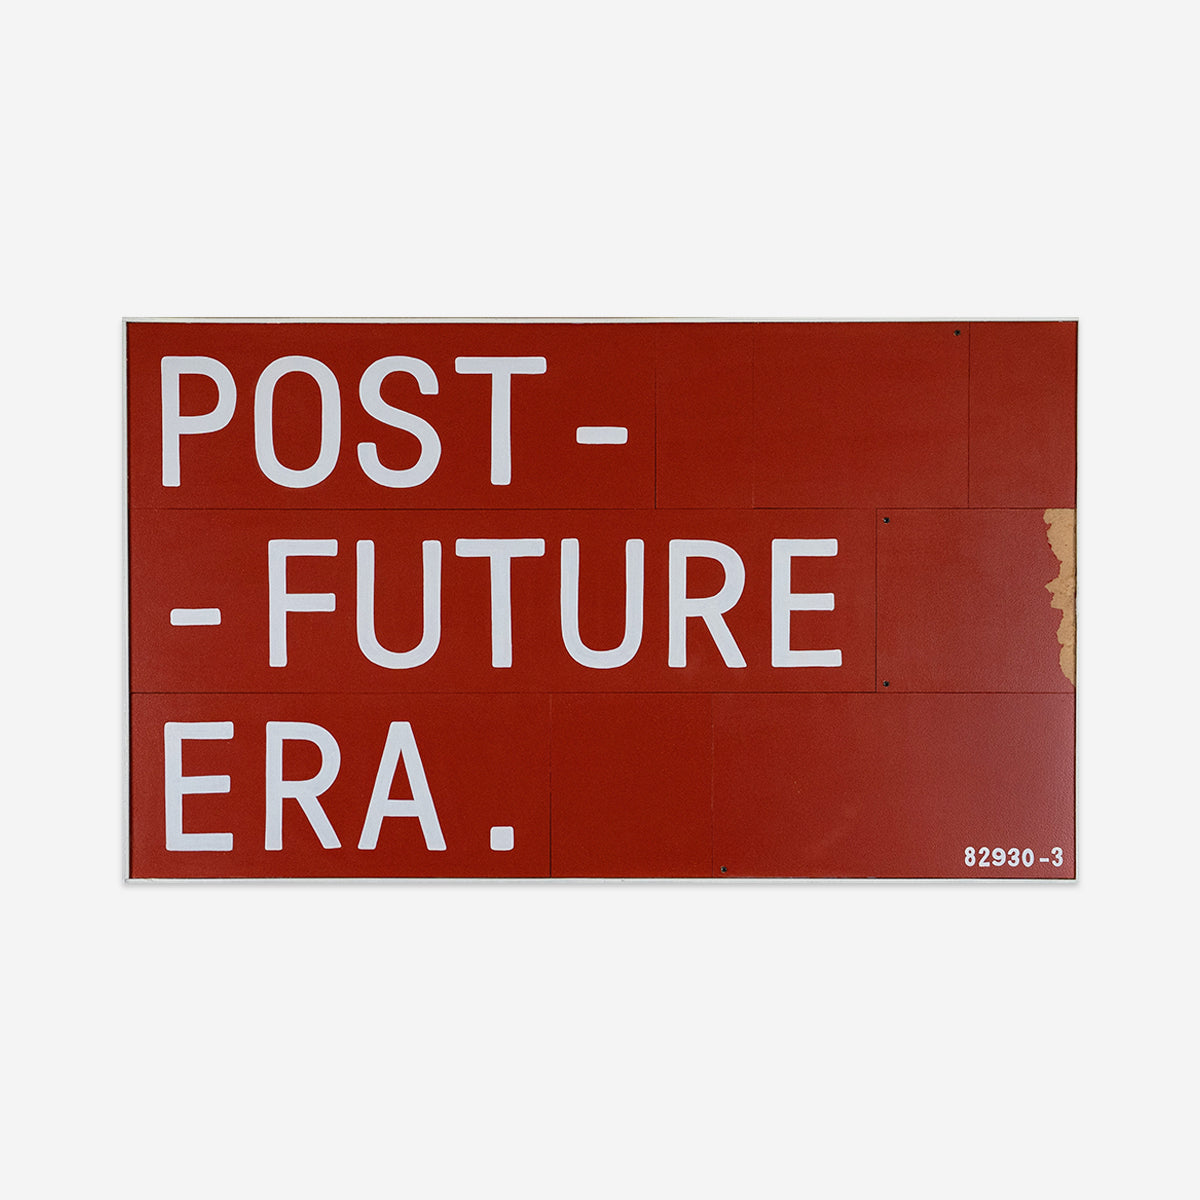 Post Future Era by Kunel Gaur